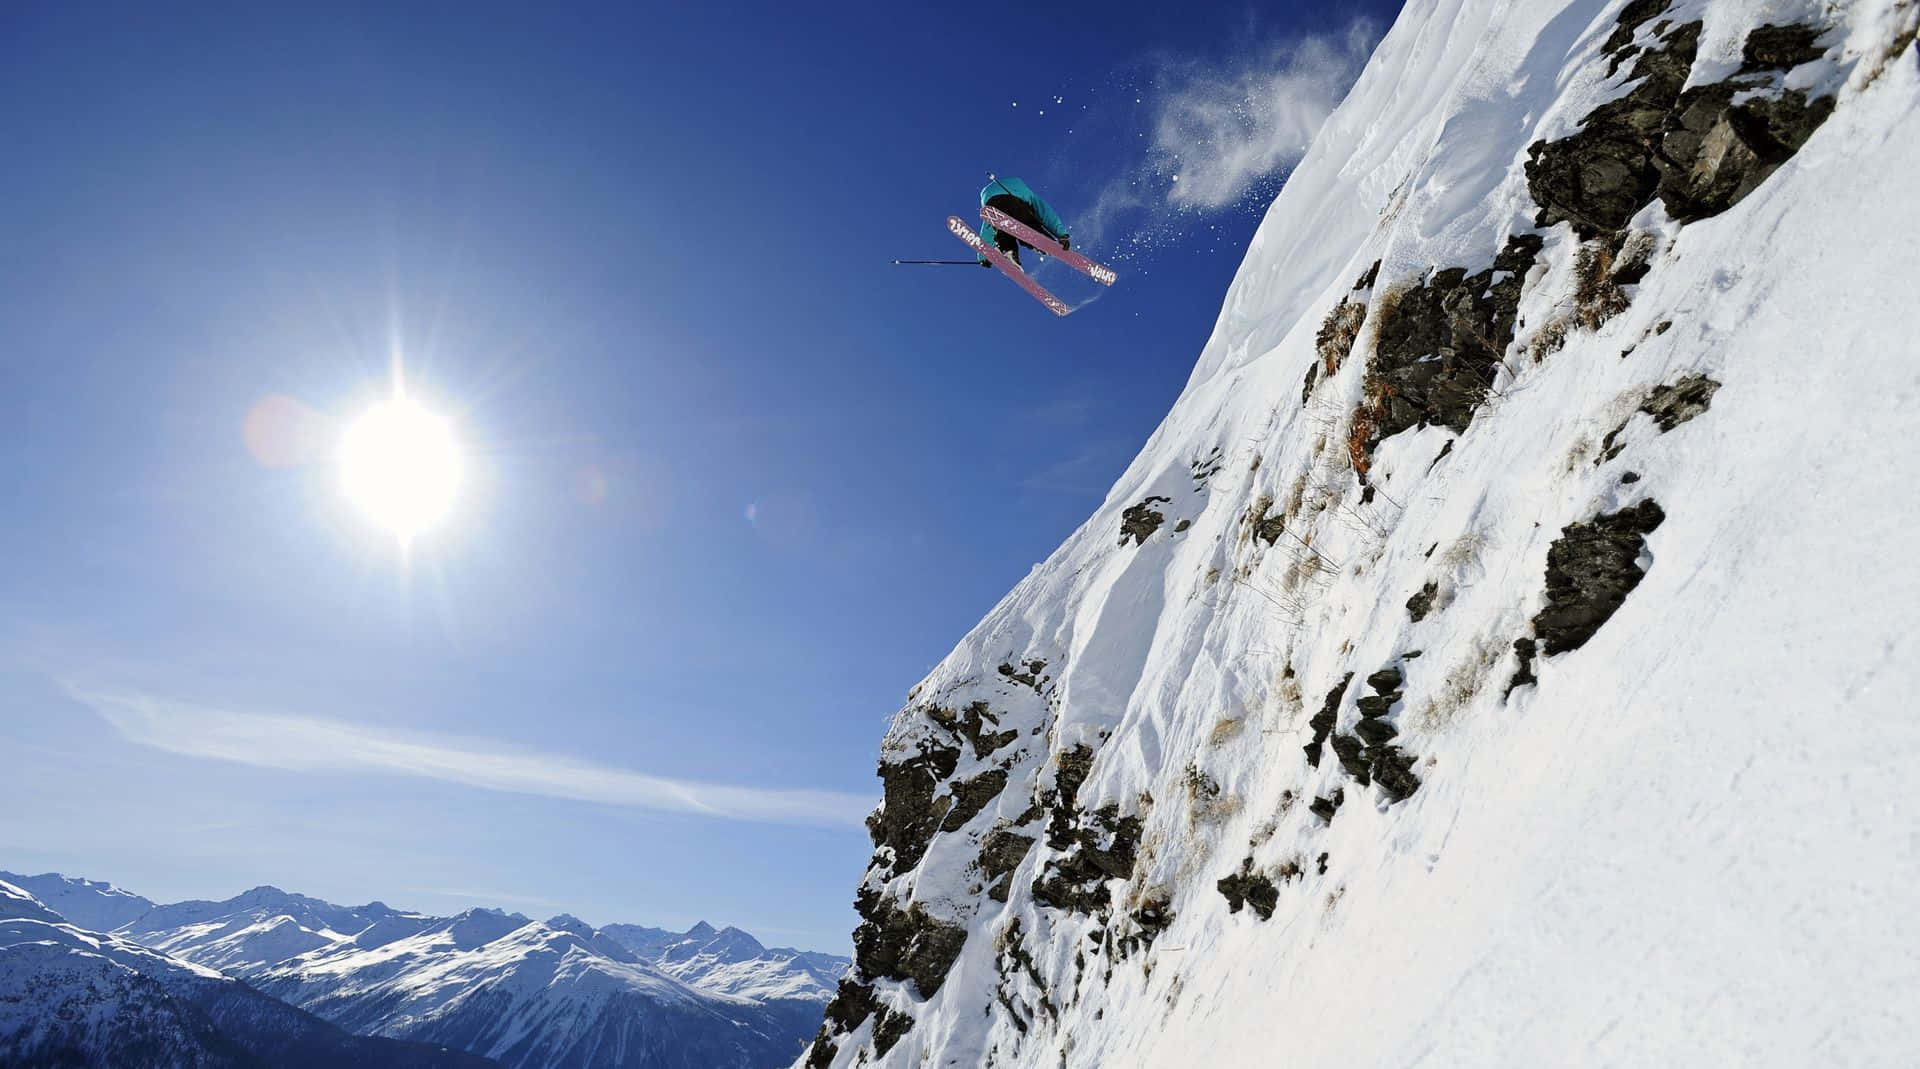 Skier gliding down a snowy mountain